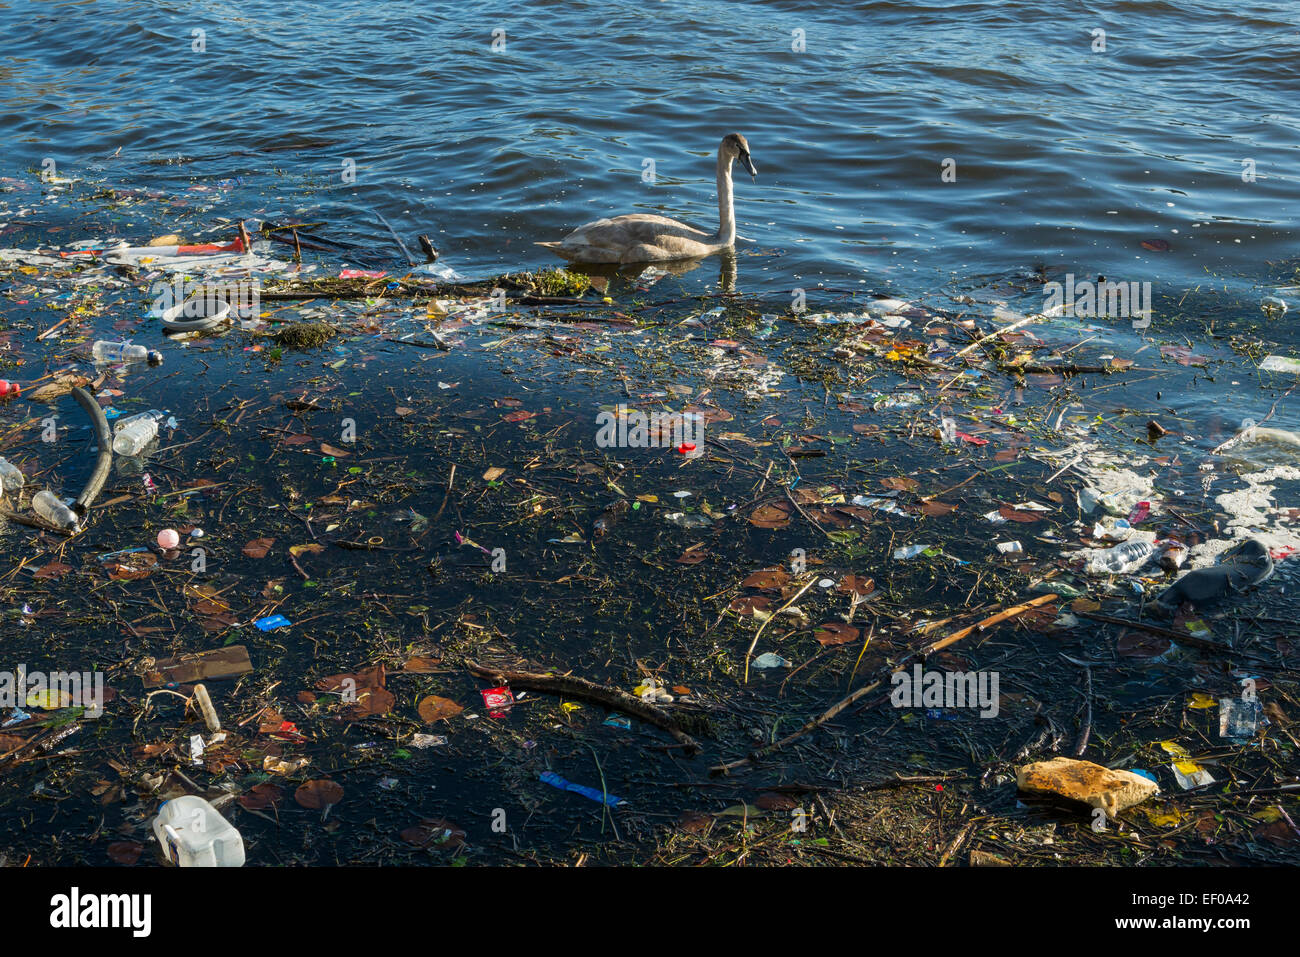 Swan swimming amongst rubbish in water Stock Photo